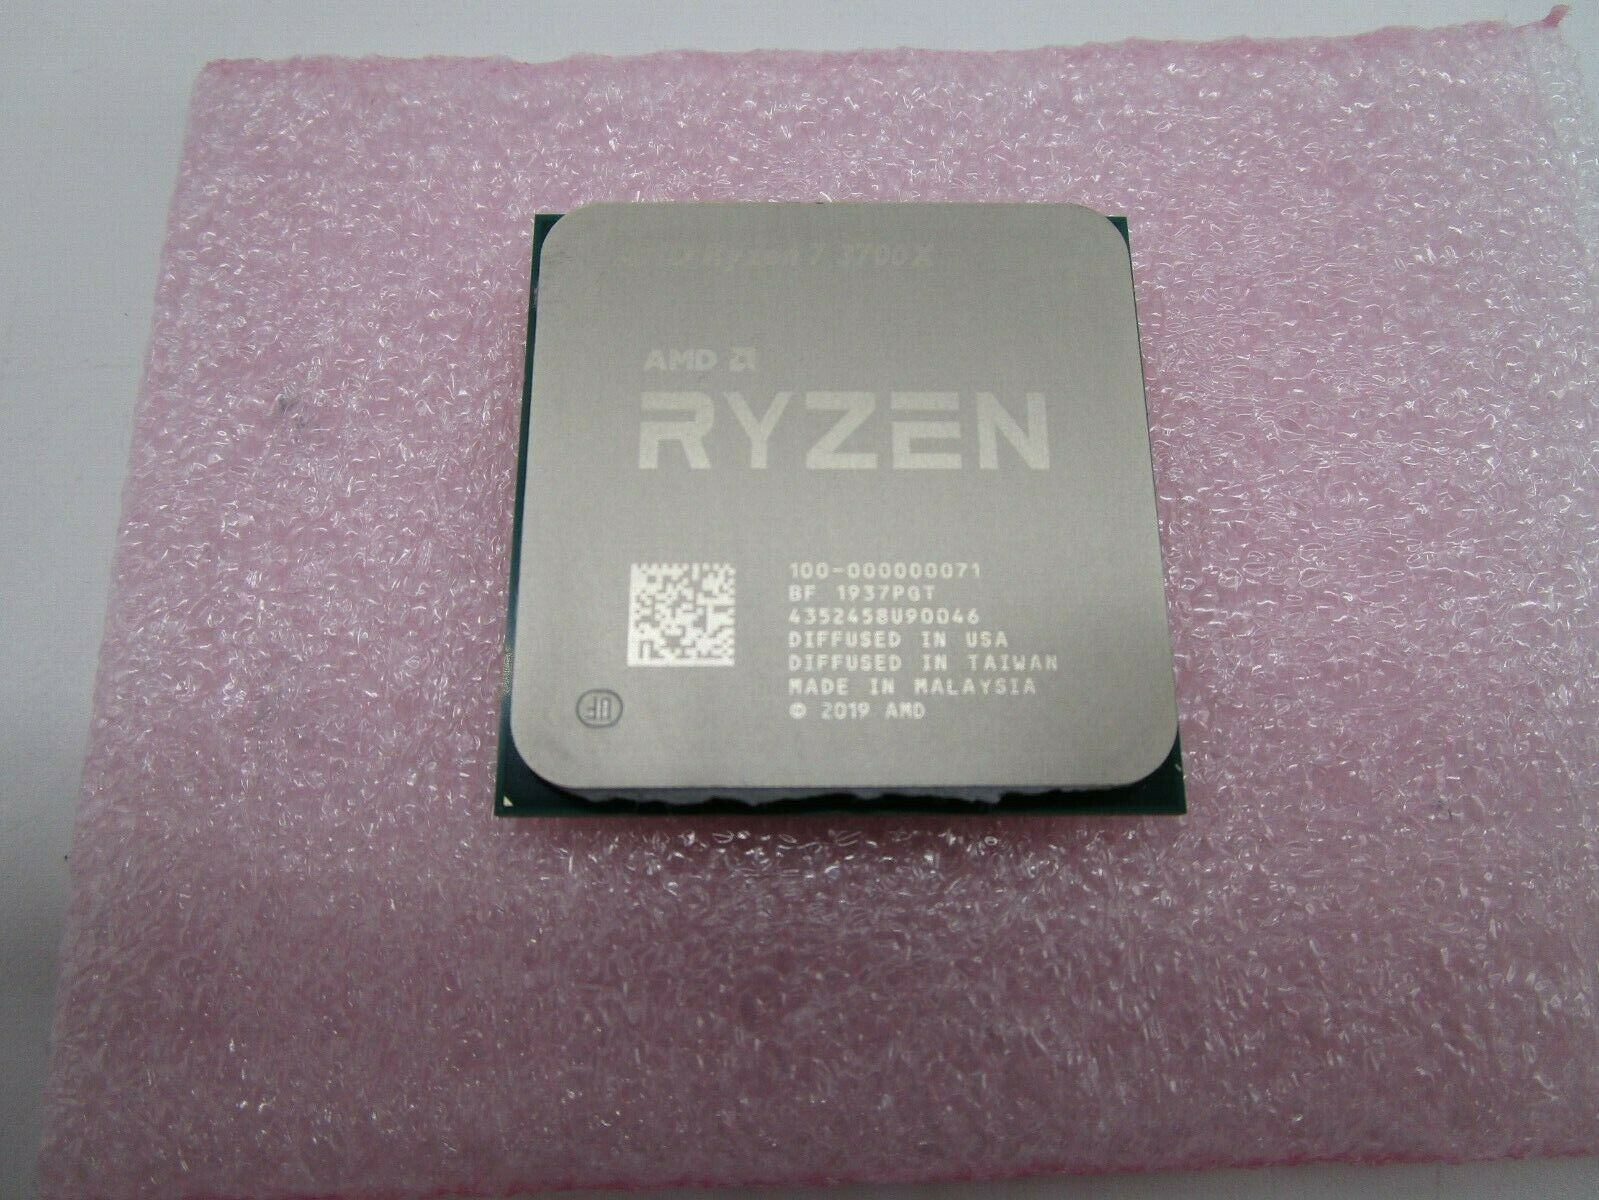 Amd ryzen 7 3700x купить. Процессор Ryzen 7 3700x купить.